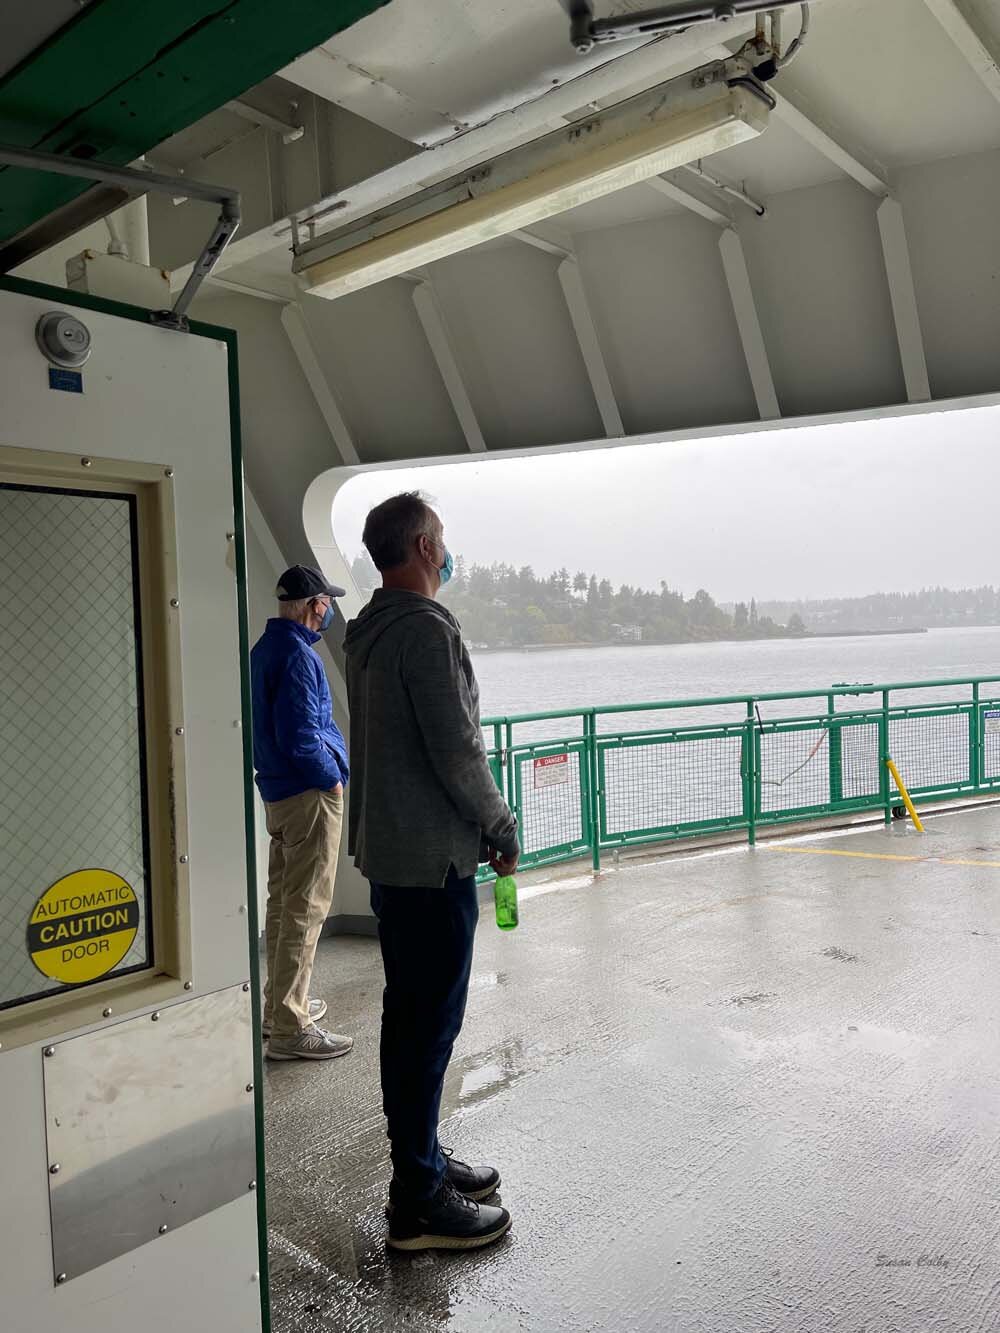 Rain watcher on the ferry